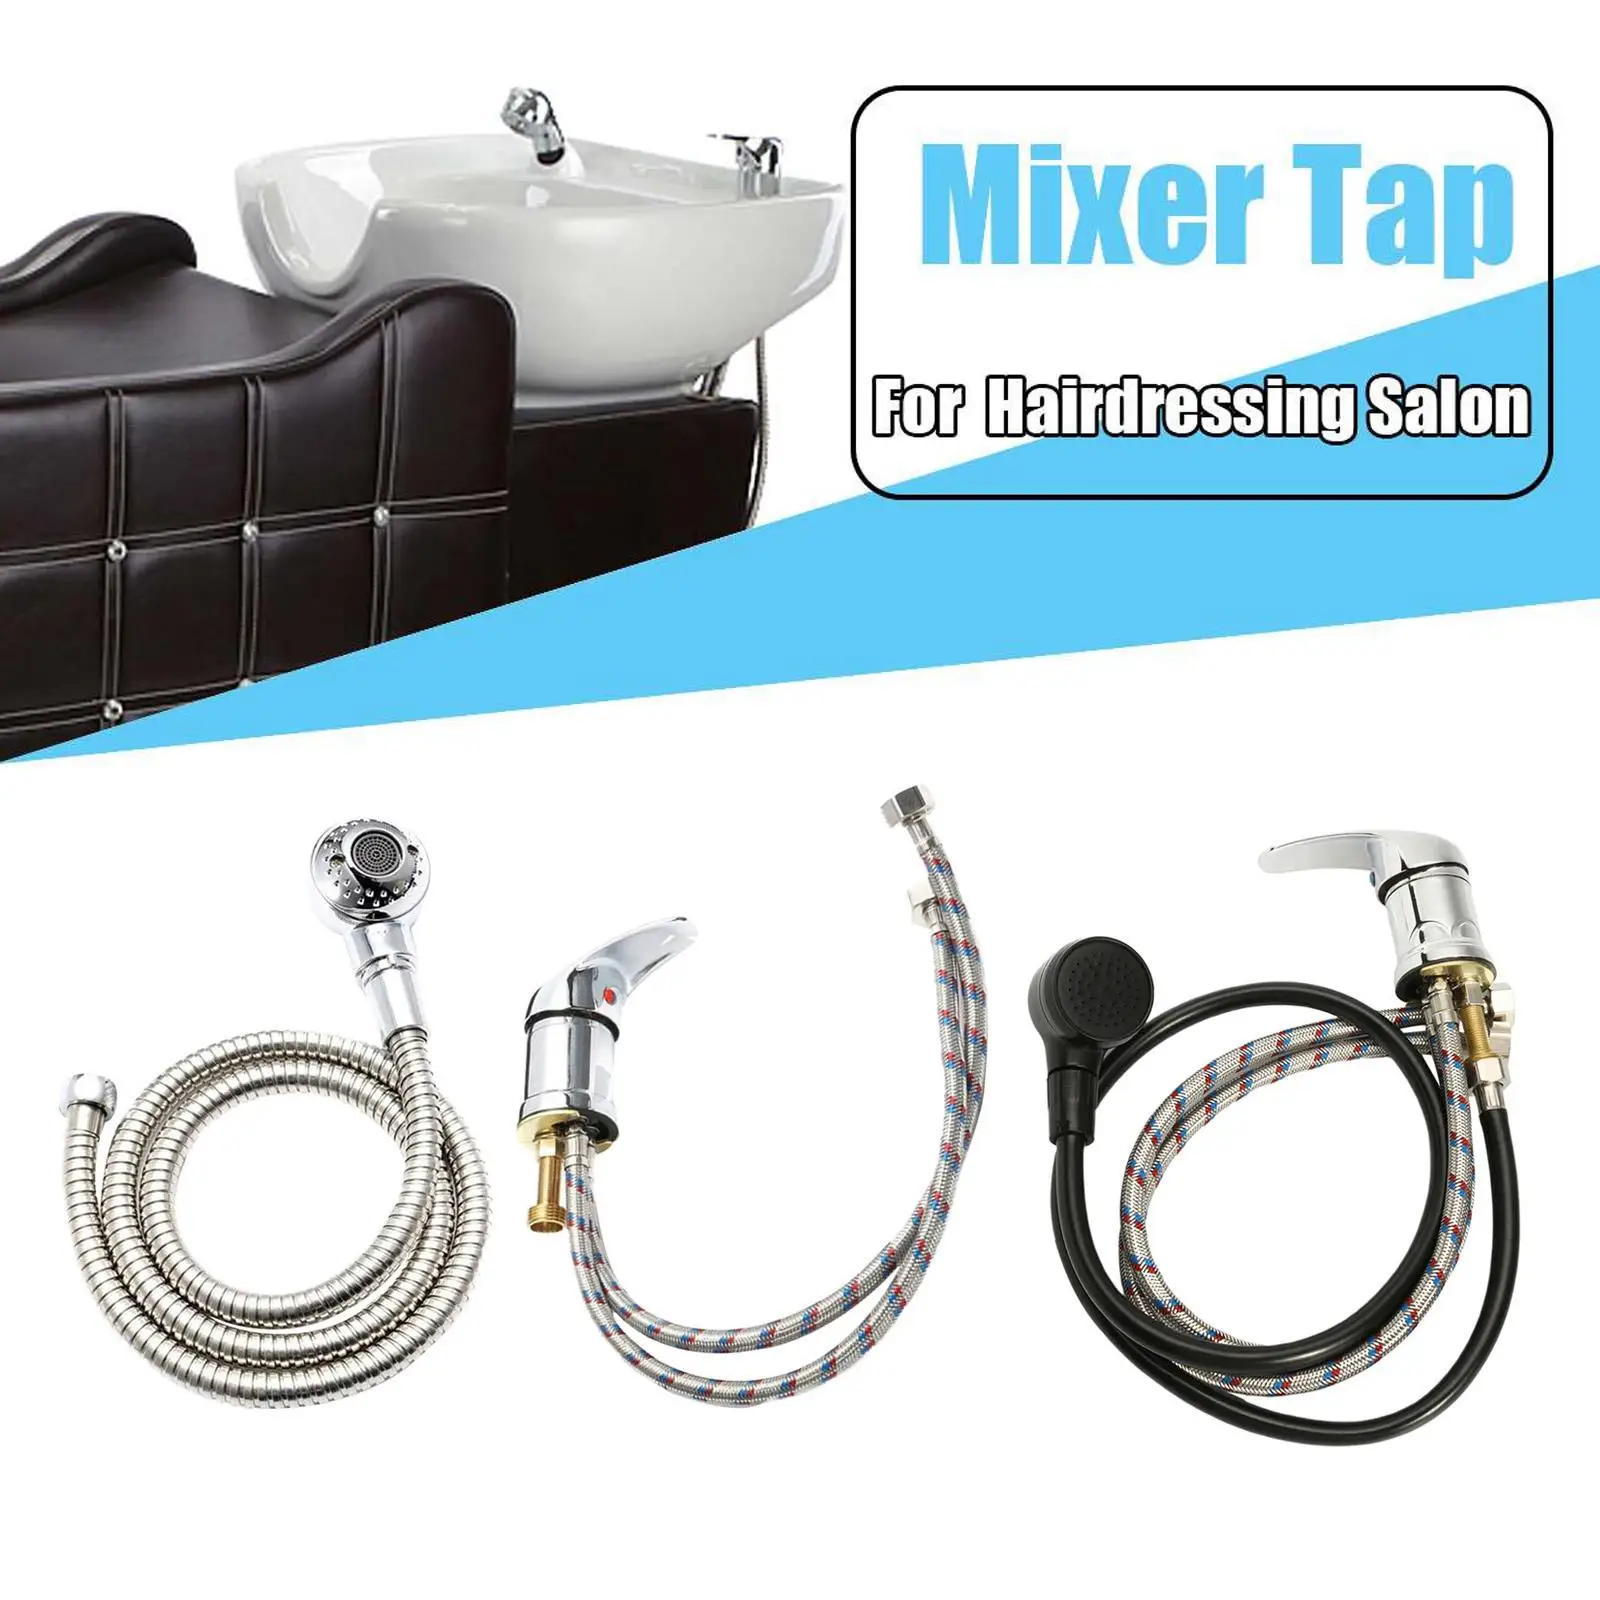 Mixer Tap Bath Sink Faucet Shower Head Spray Hose,Push On Washing Hairdresser Salon Pet,Household Faucet Extender